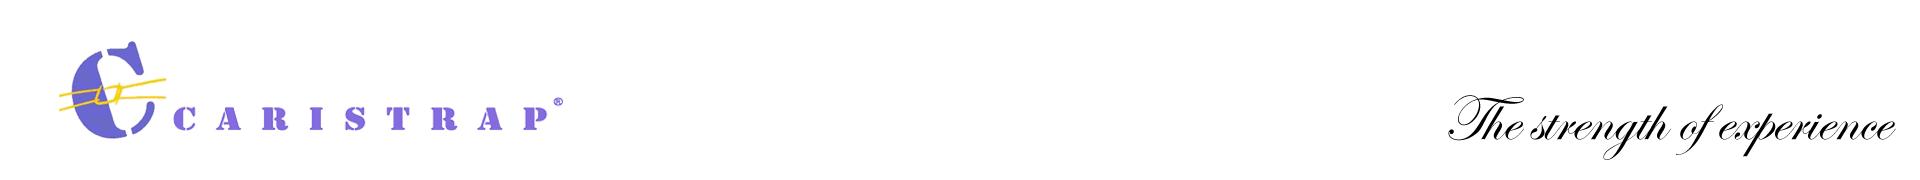 Caristrap-logo-2